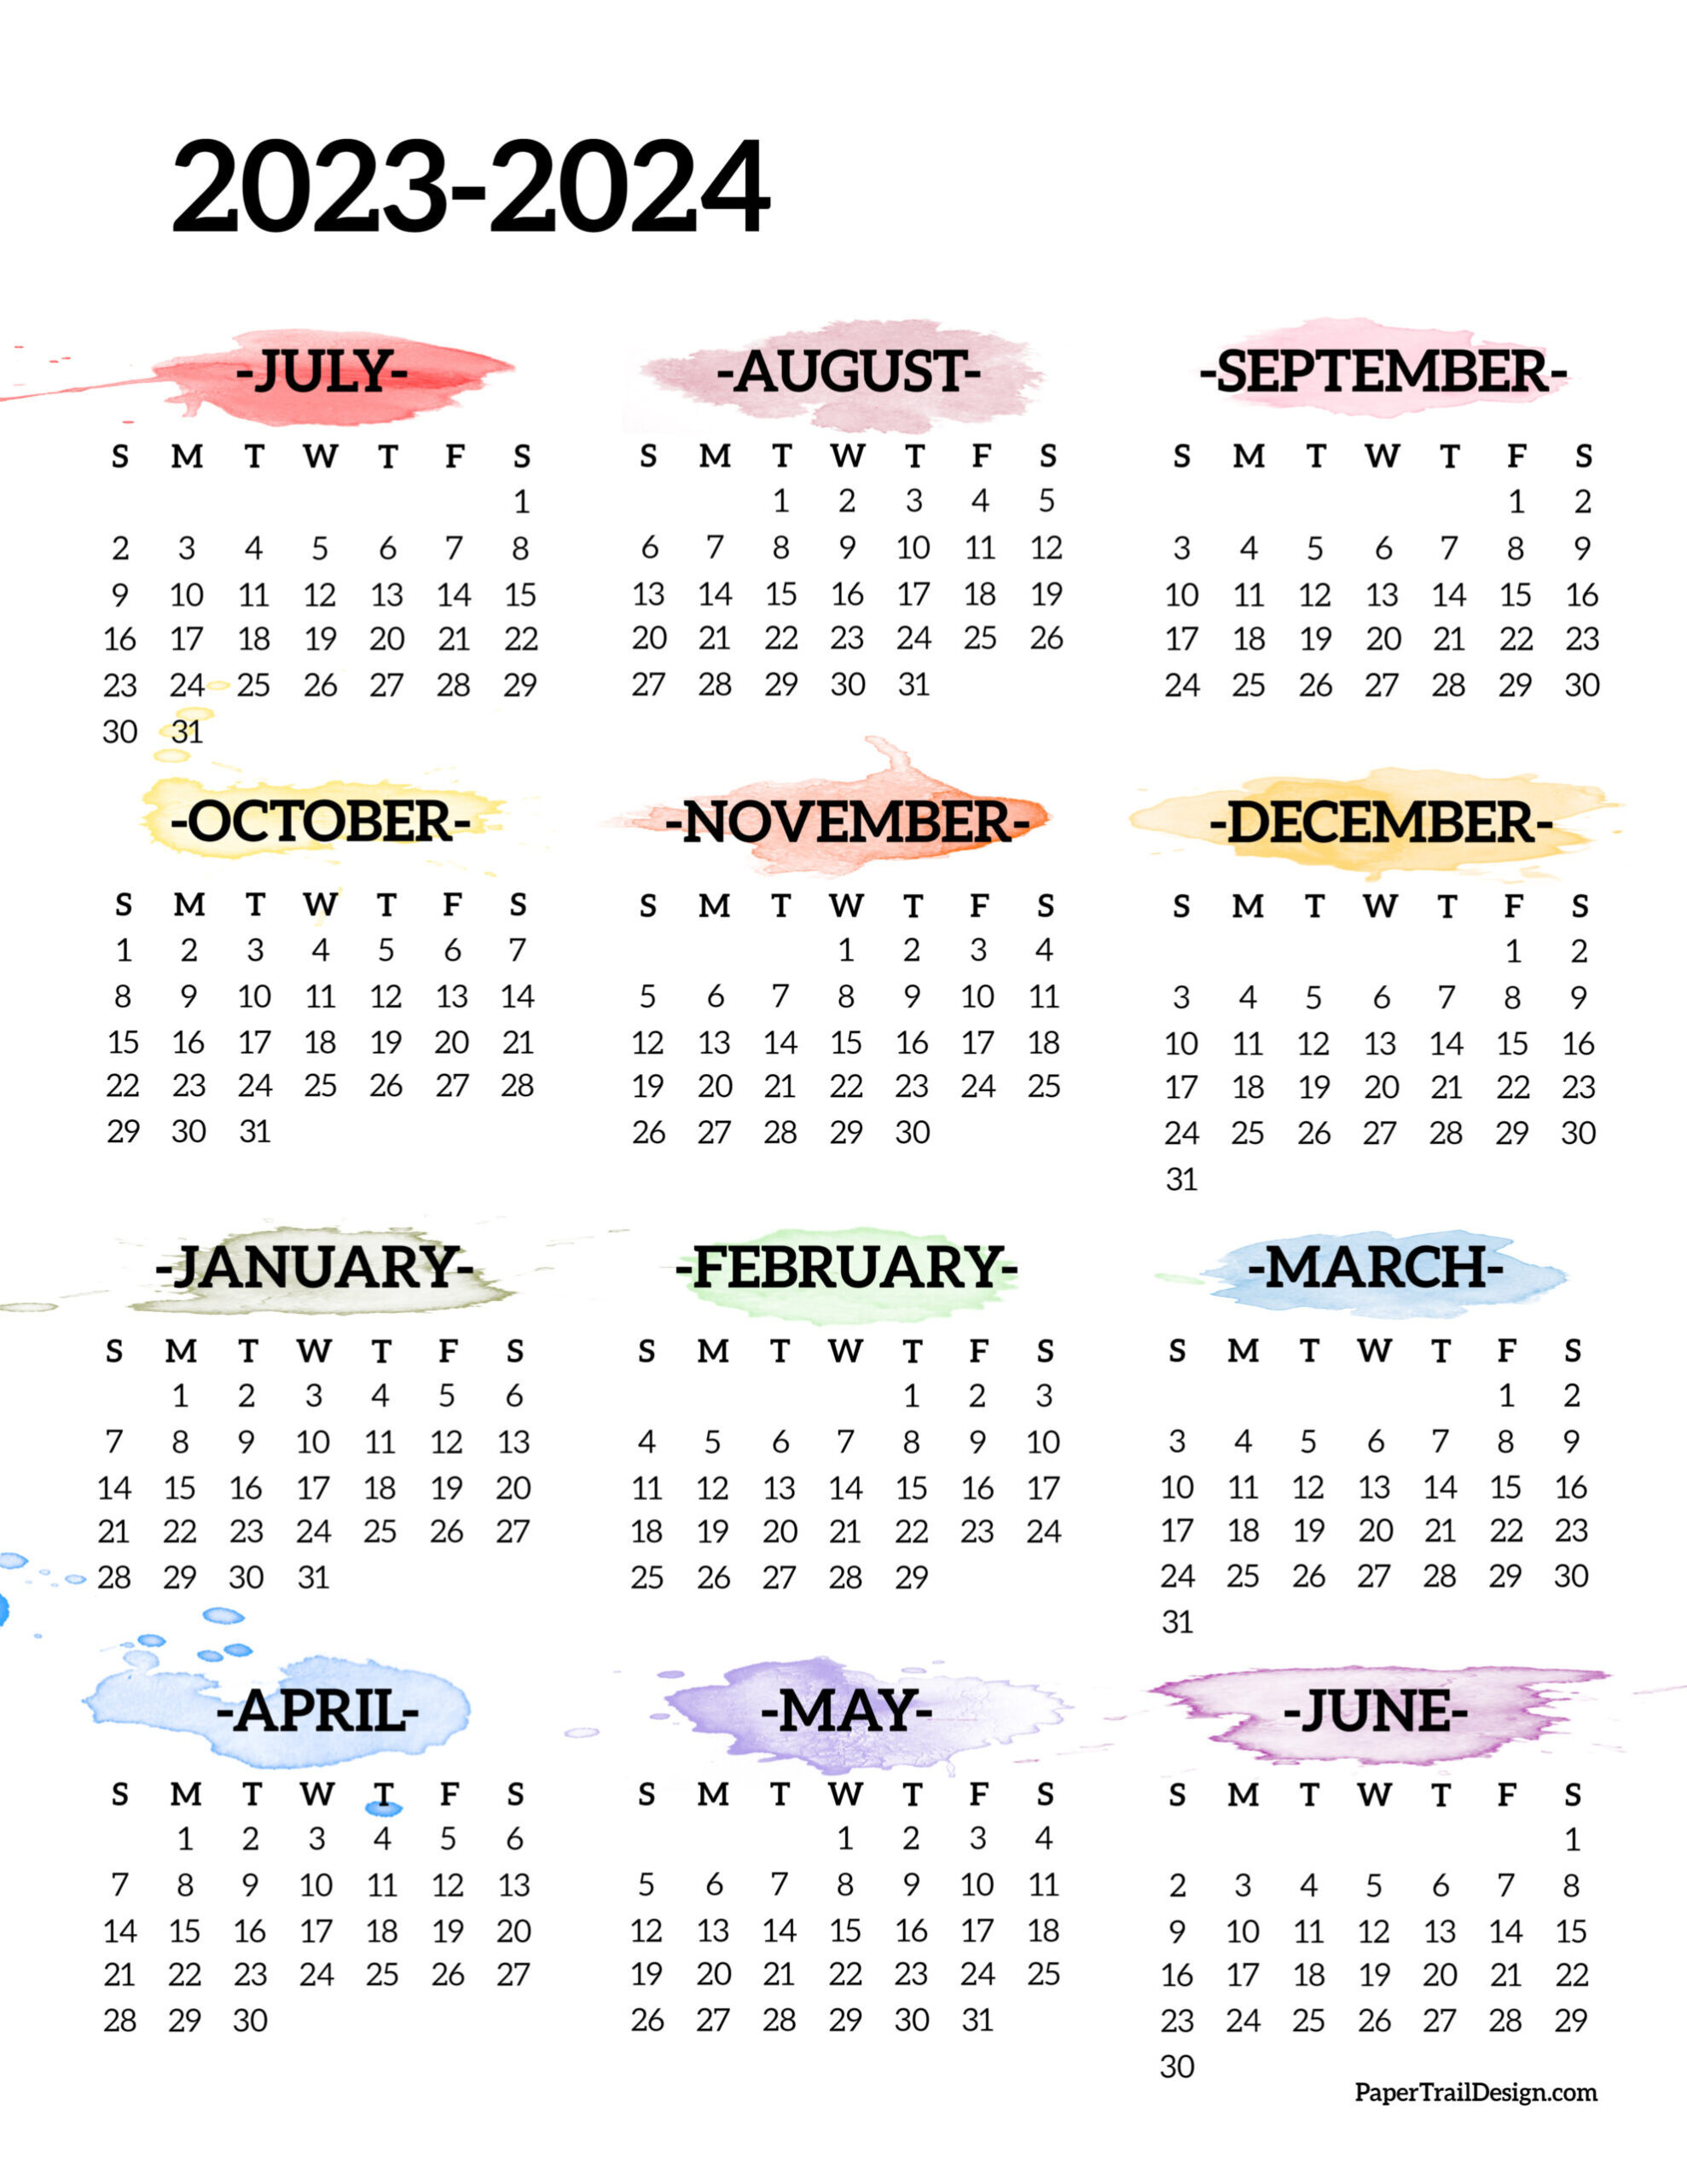 2023-2024 School Year Calendar Free Printable - Paper Trail Design regarding Academic Calendar July 2023 To June 2024